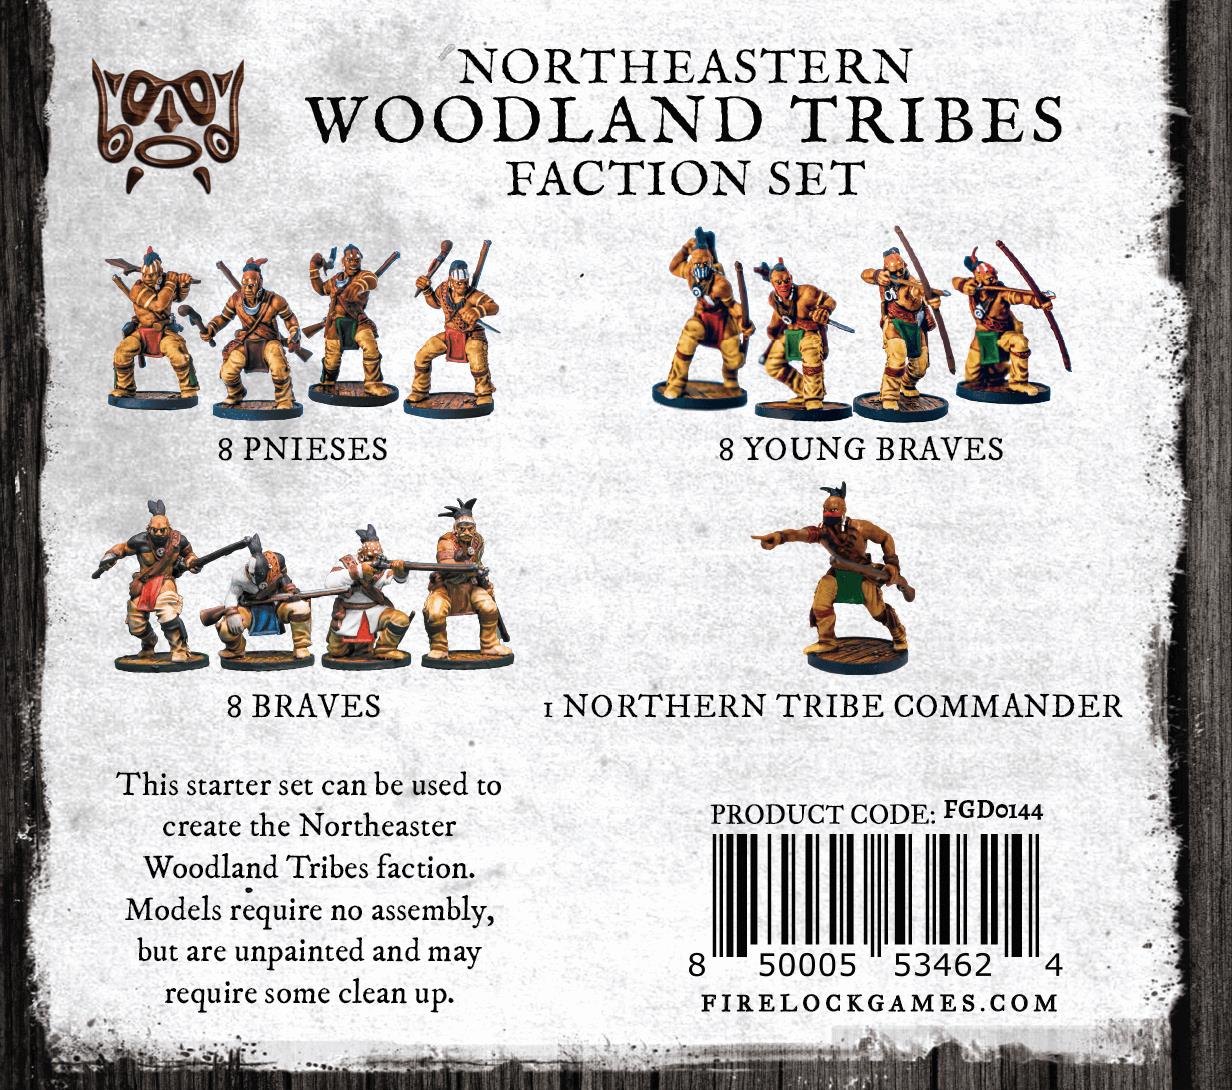 Northeastern Woodland Tribes Faction Set